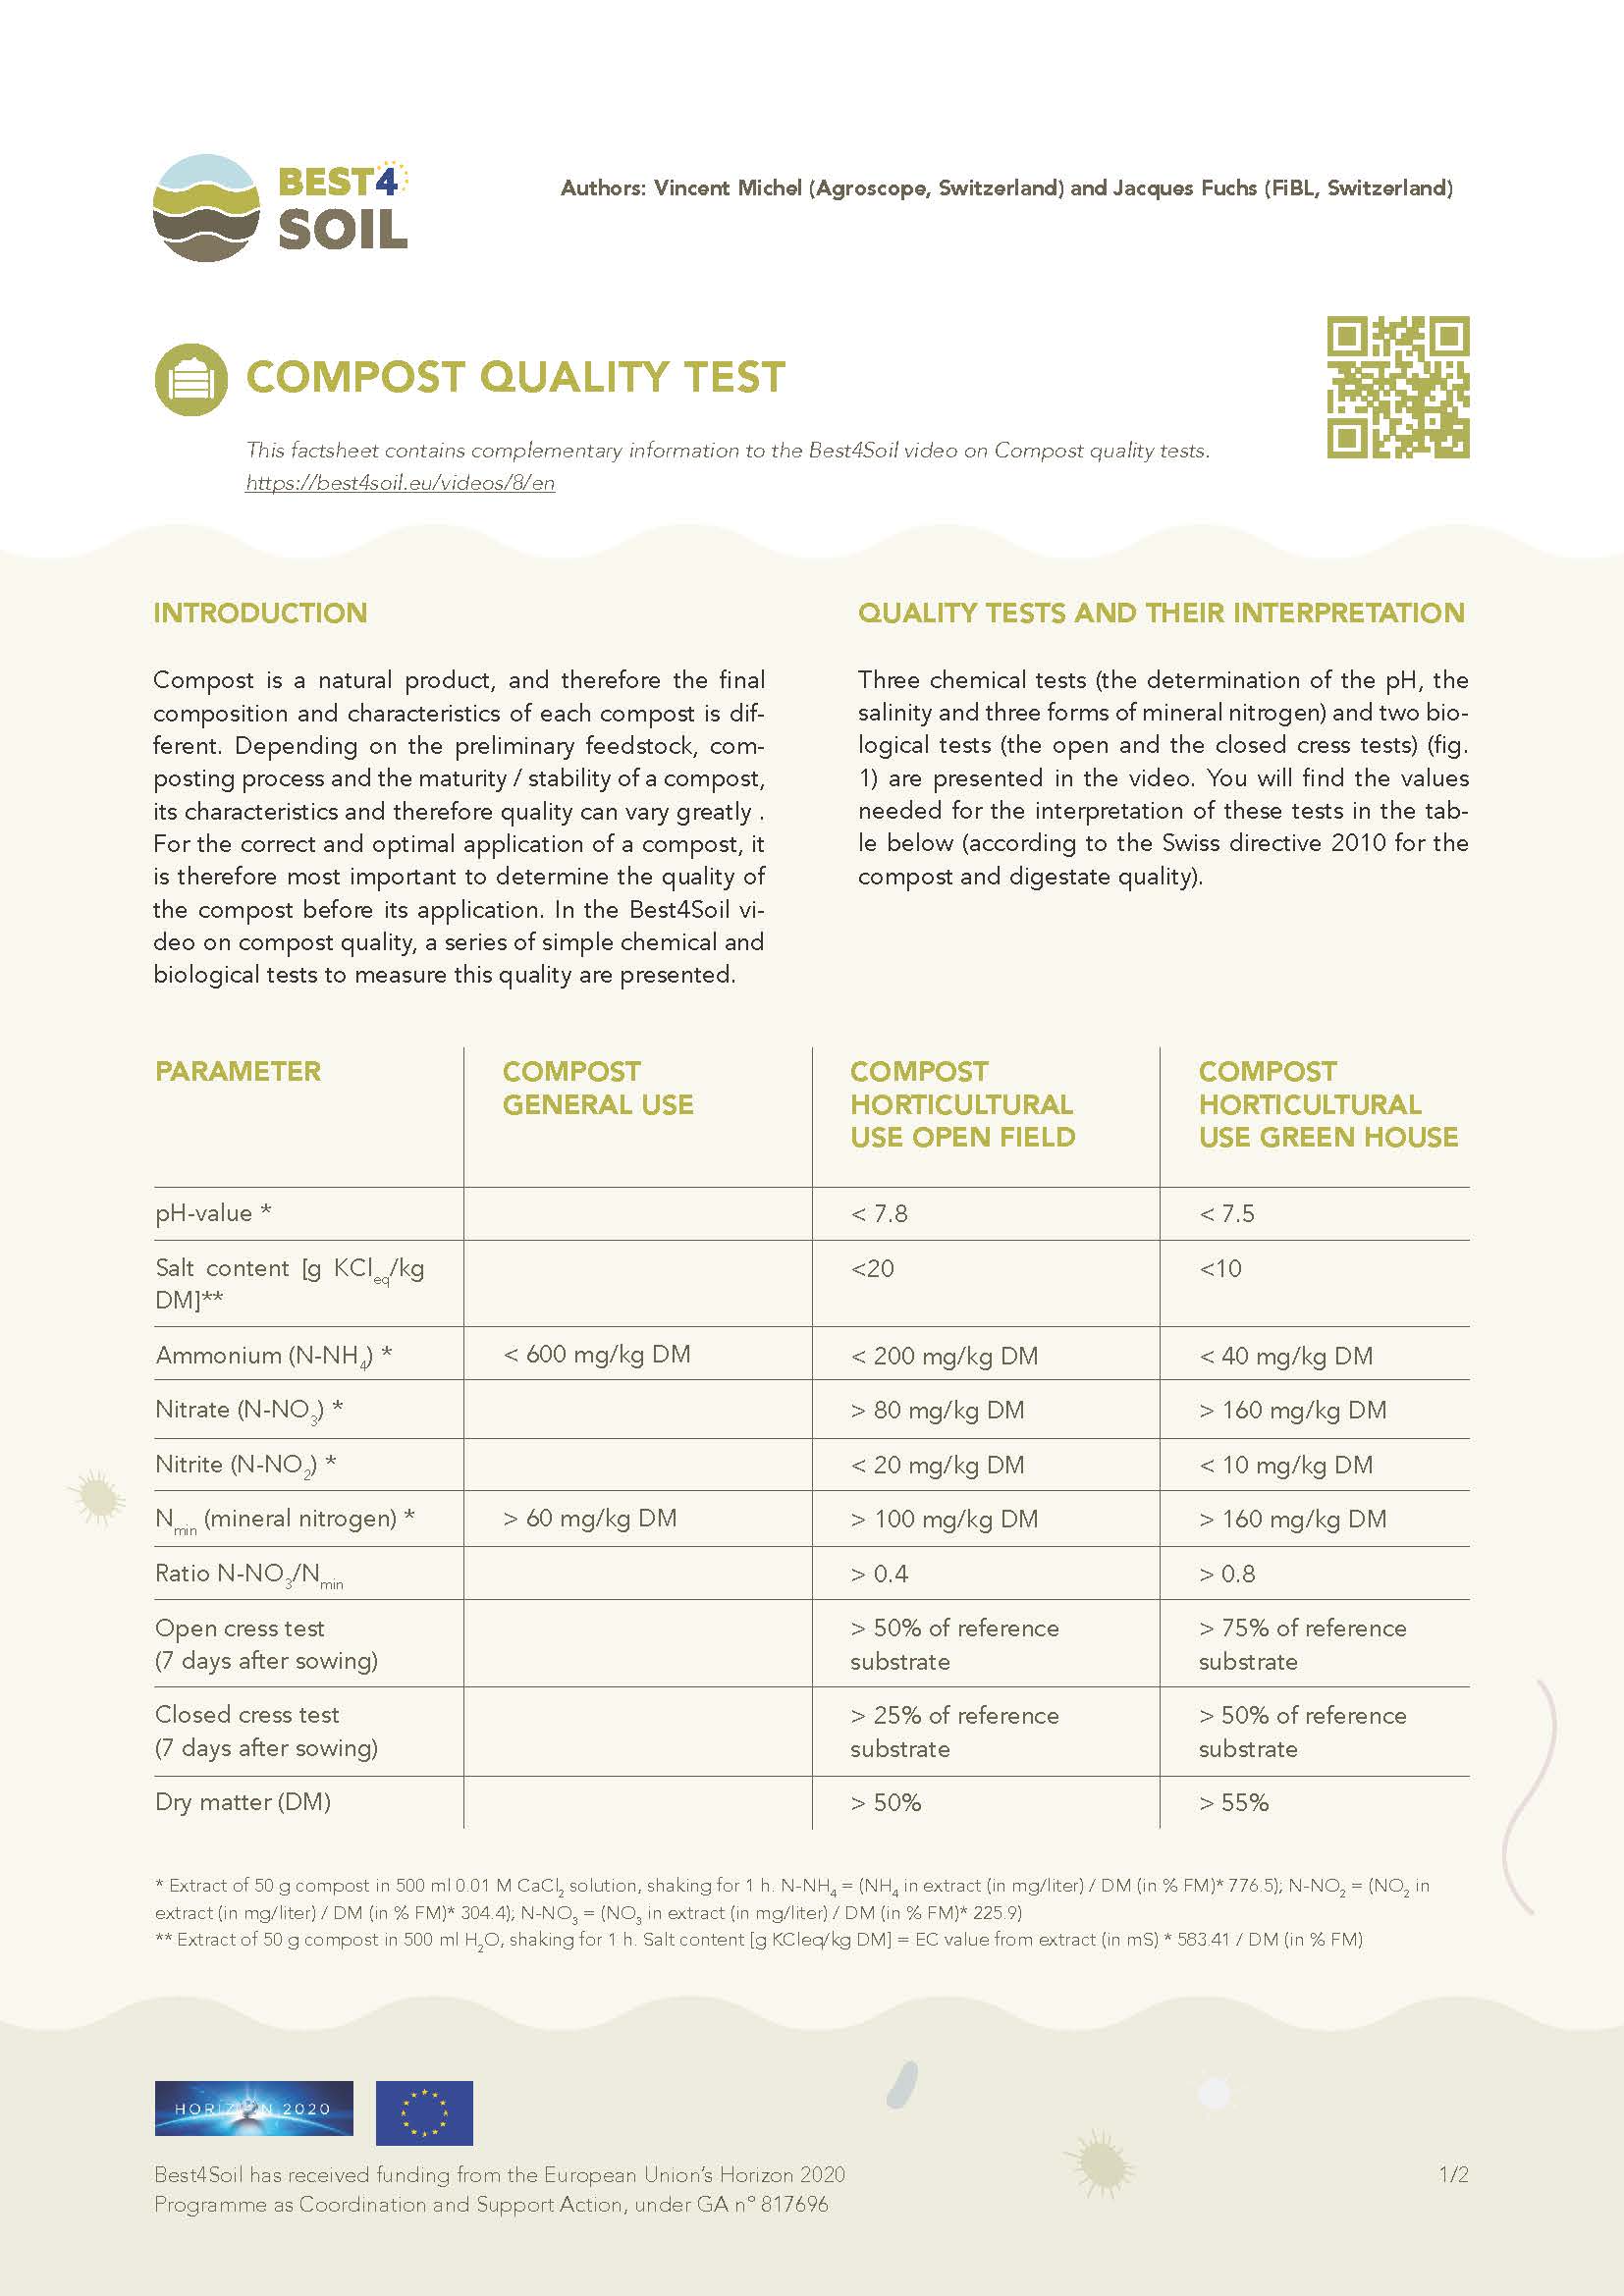 Test di qualità del compost (scheda informativa Best4Soil)